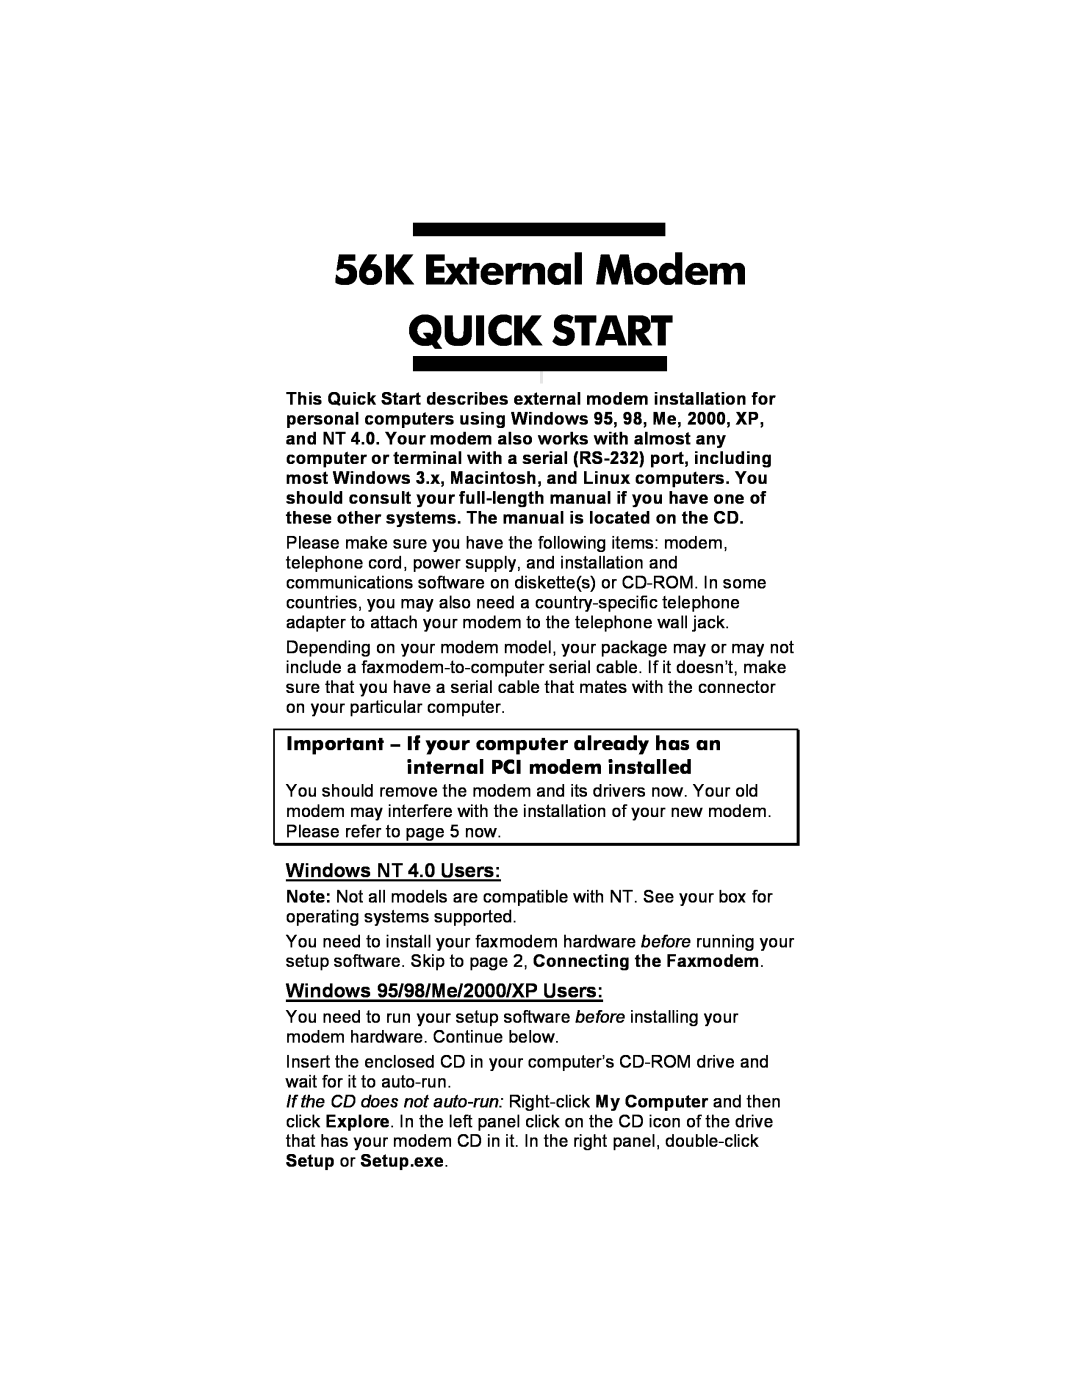 Zoom quick start Windows NT 4.0 Users, Windows 95/98/Me/2000/XP Users, 56K External Modem QUICK START 